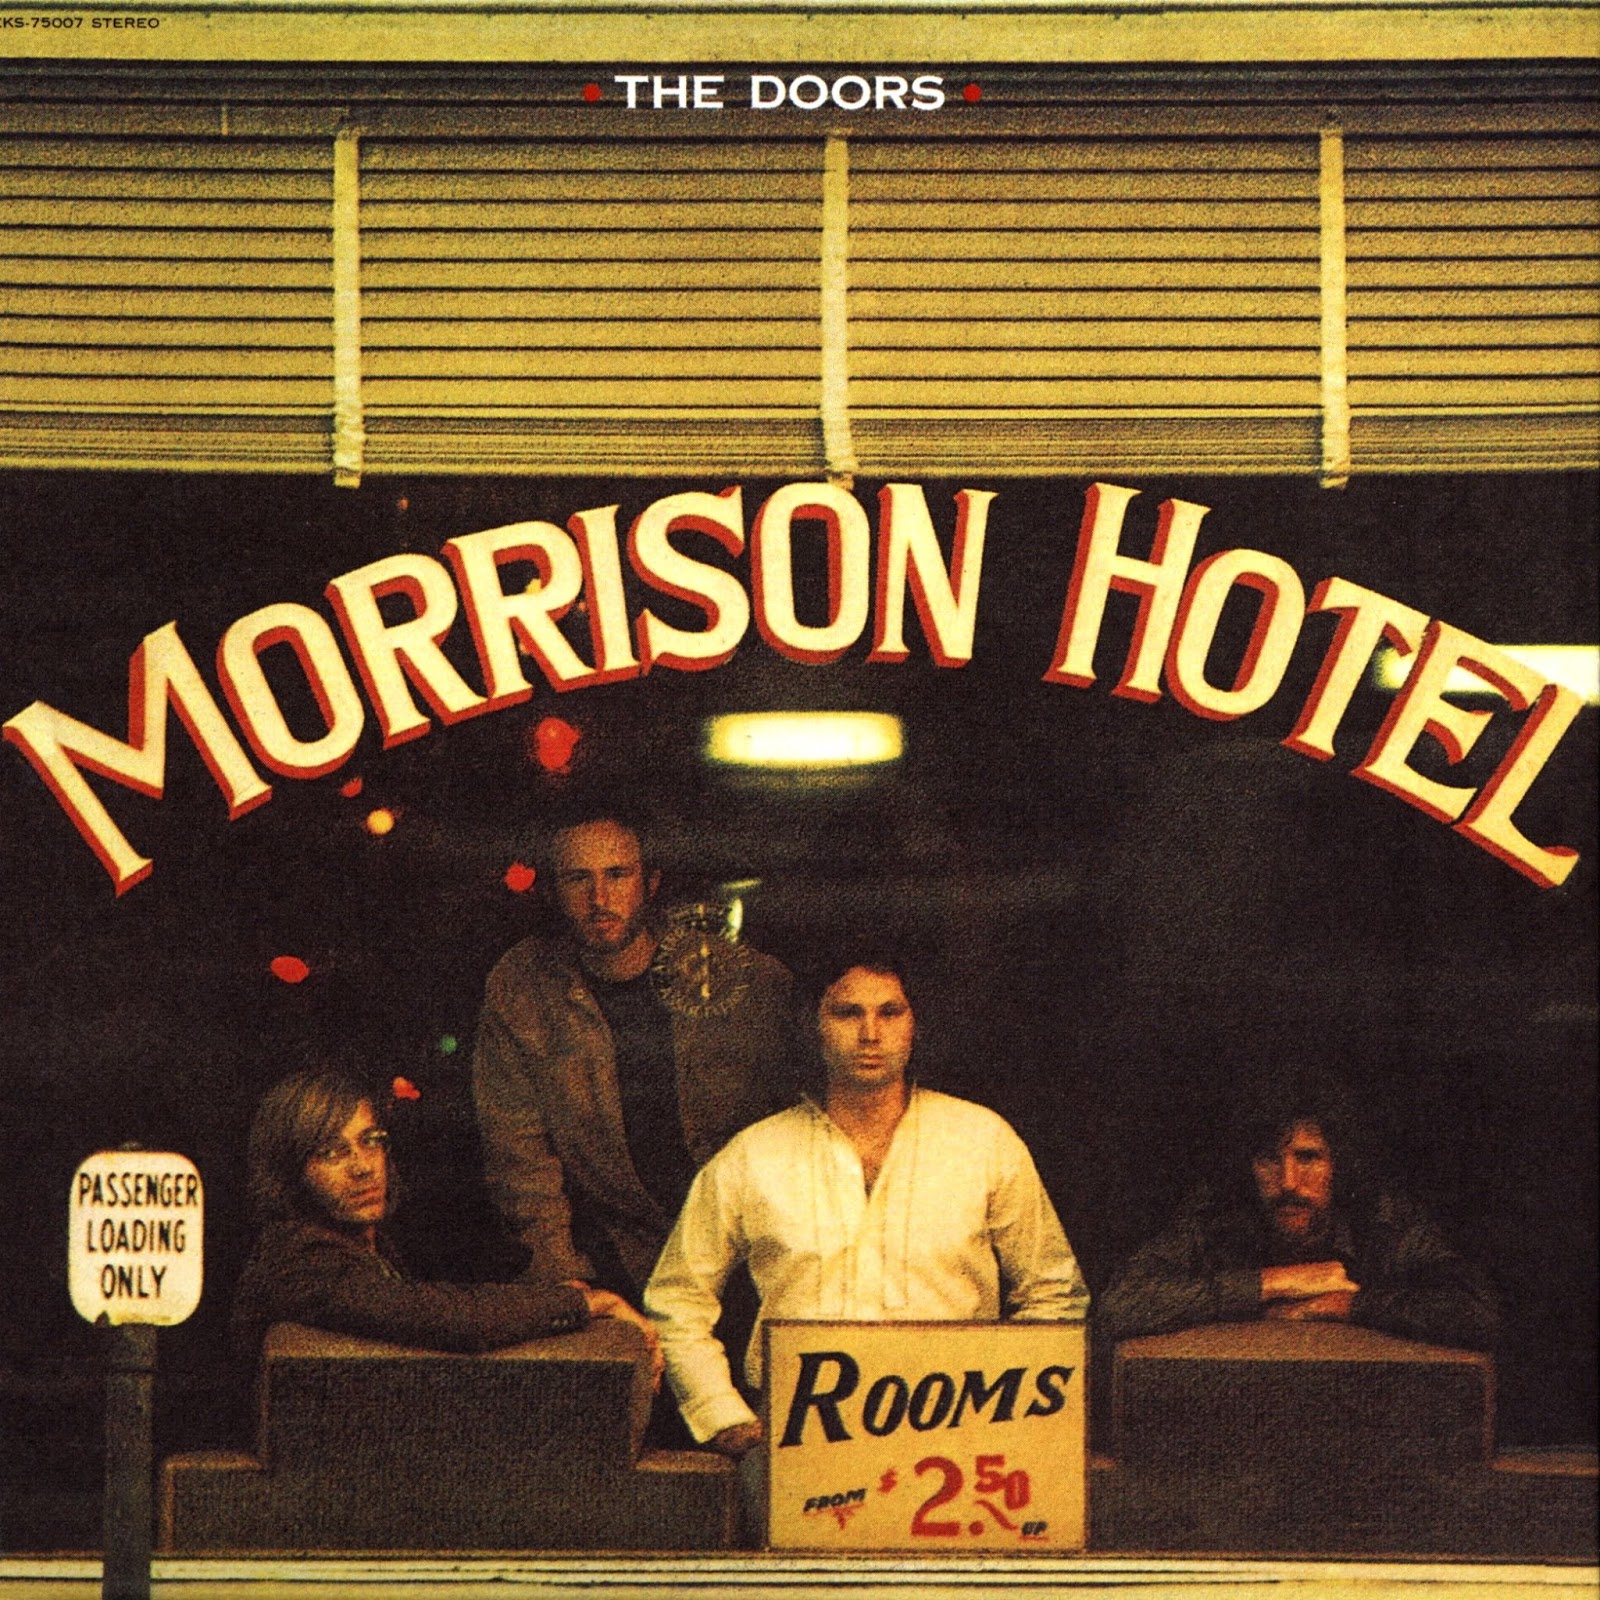 1970 Morrison Hotel - The Doors - Rockronología